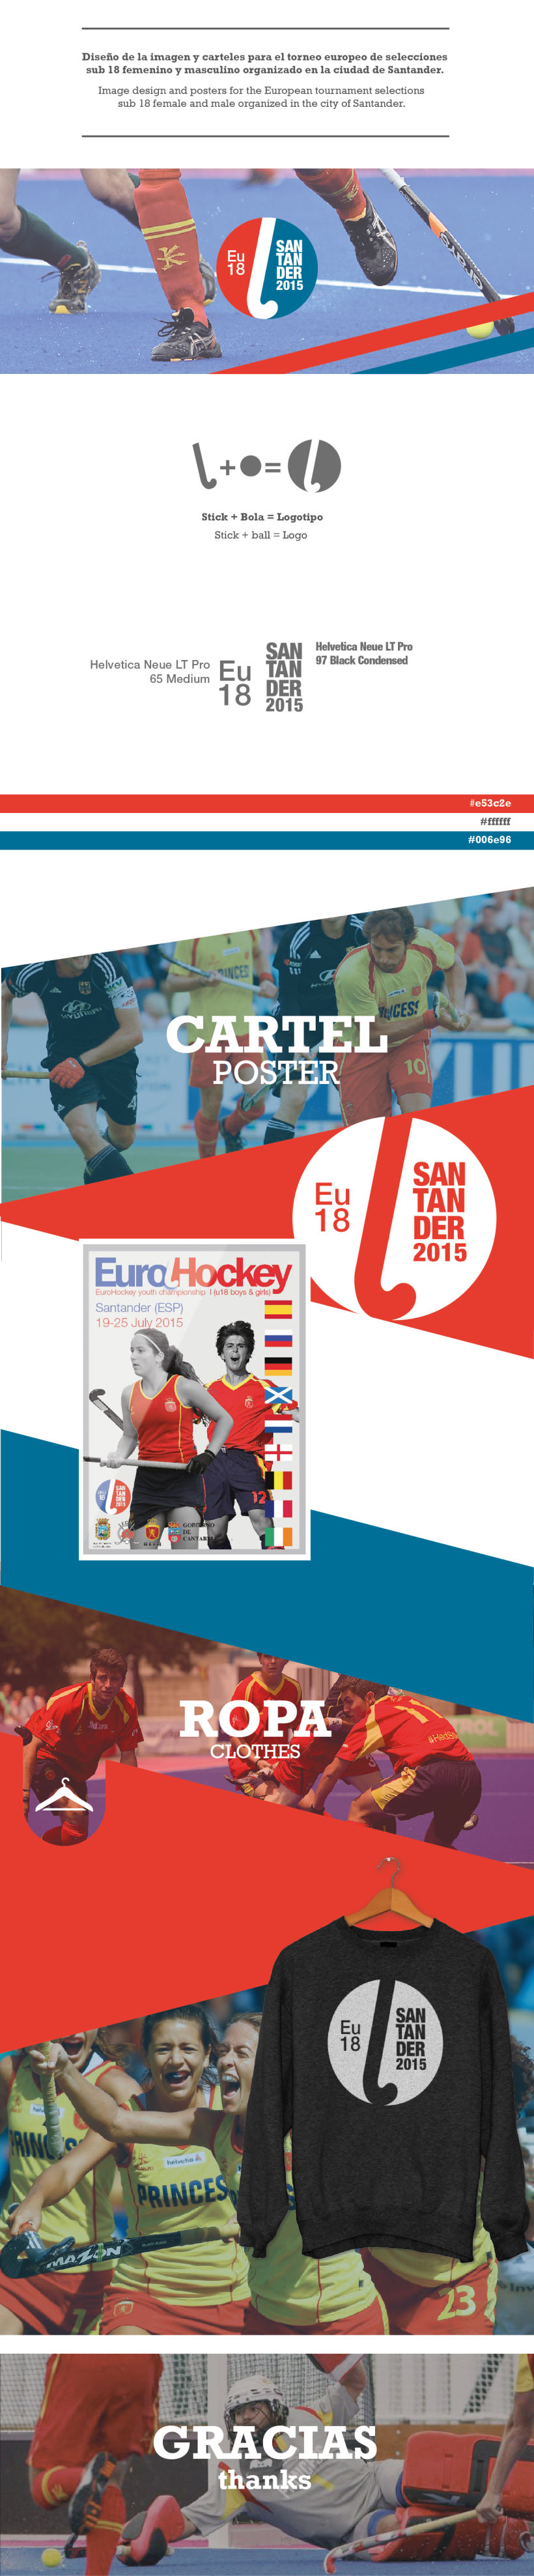 Hockey EU18 Santander -1